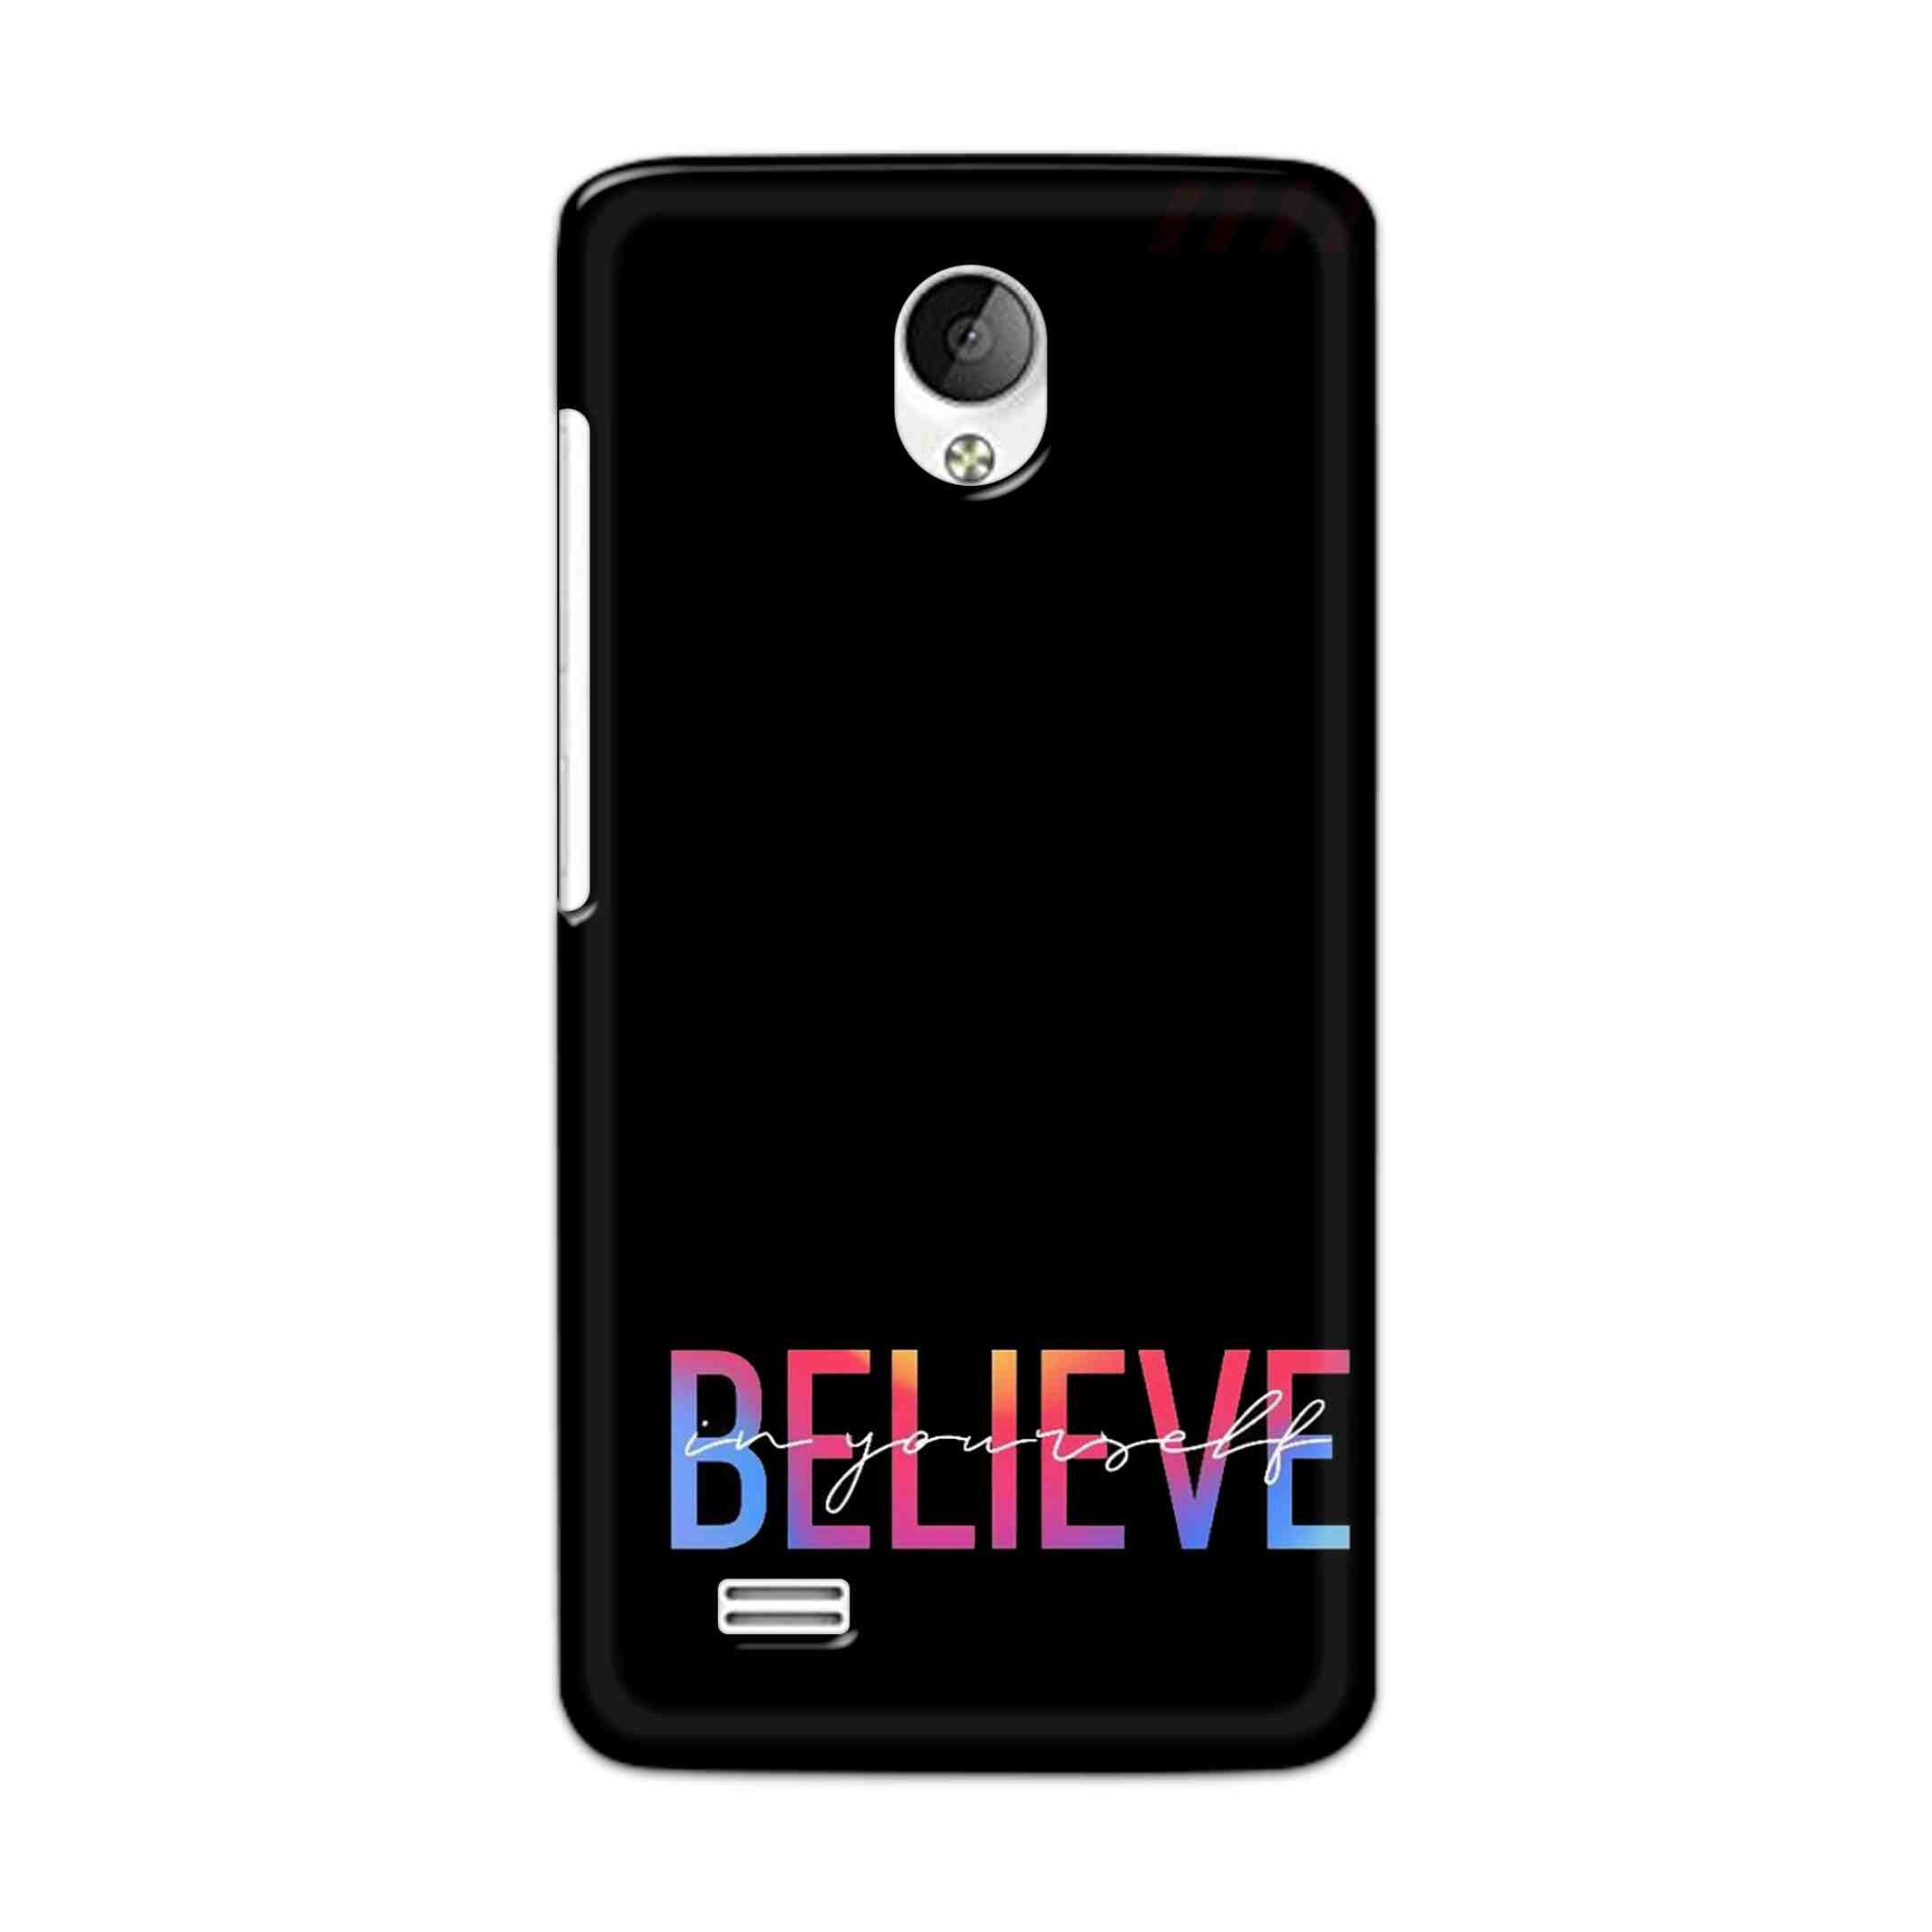 Buy Believe Hard Back Mobile Phone Case Cover For Vivo Y21 / Vivo Y21L Online